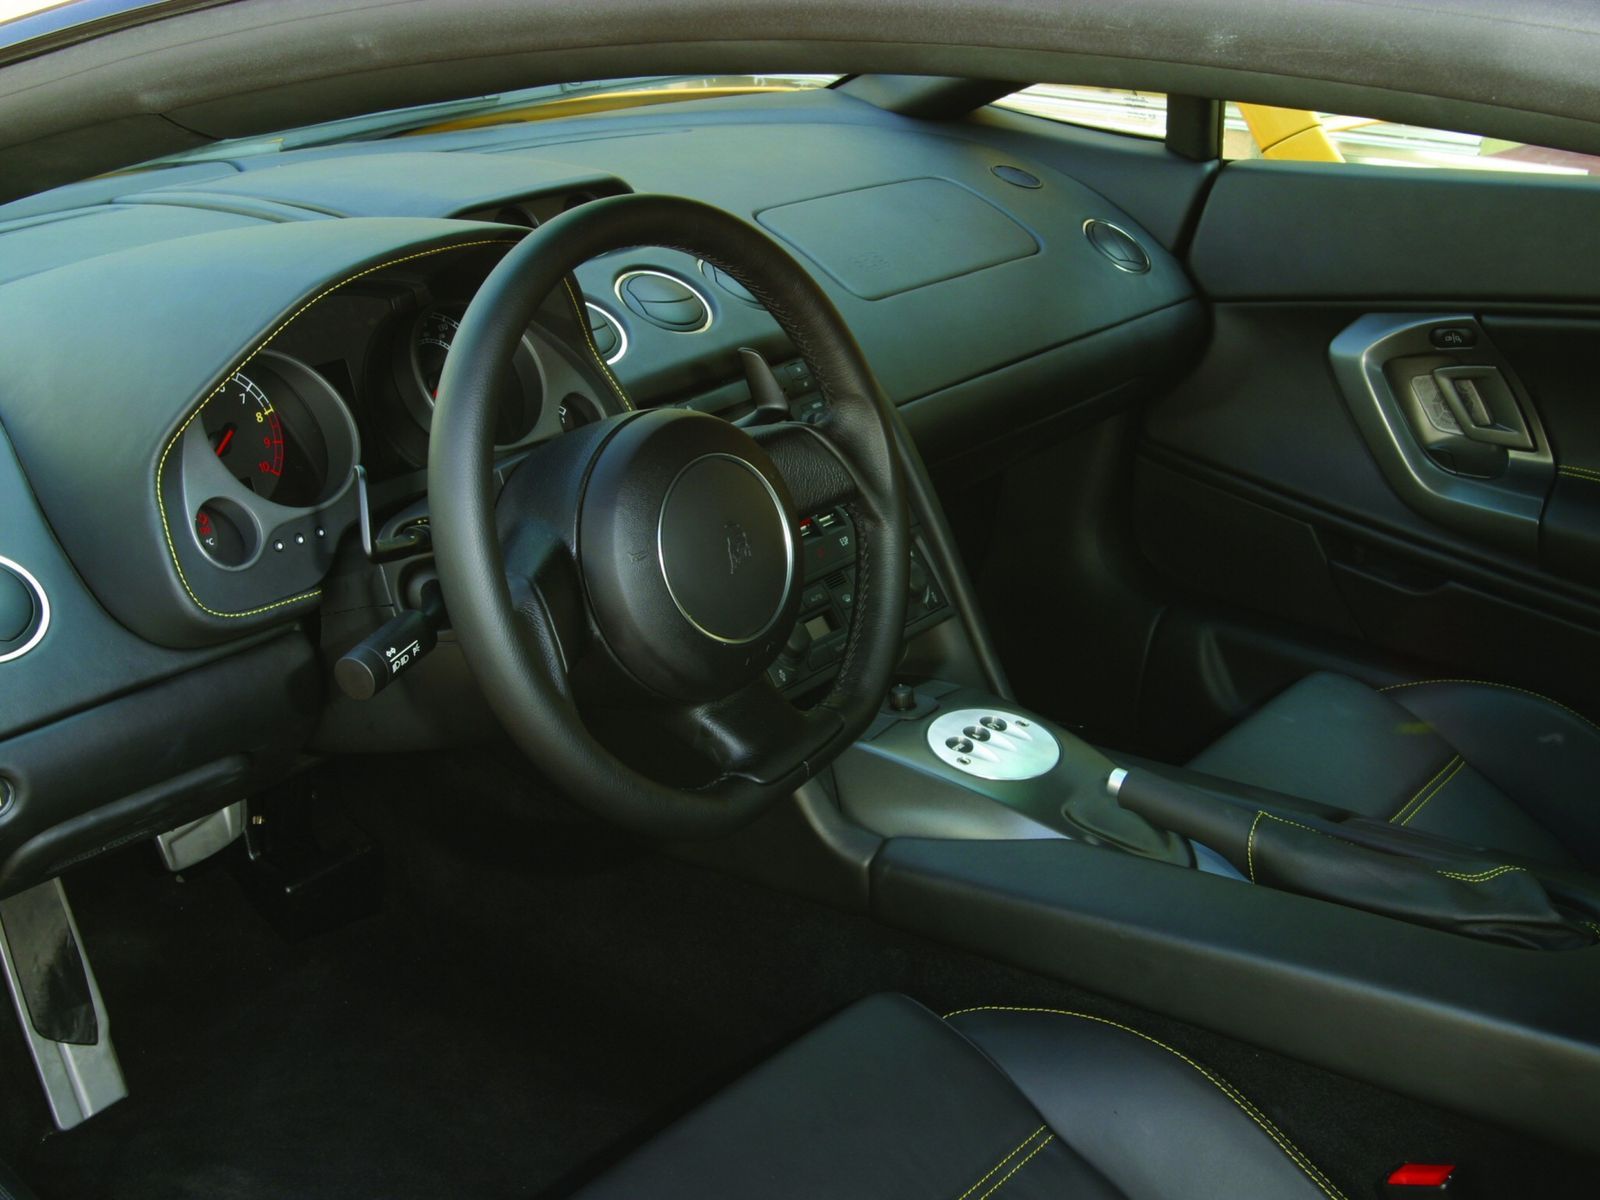 The Stylish Interior Of The 2003 Lamborghini Gallardo